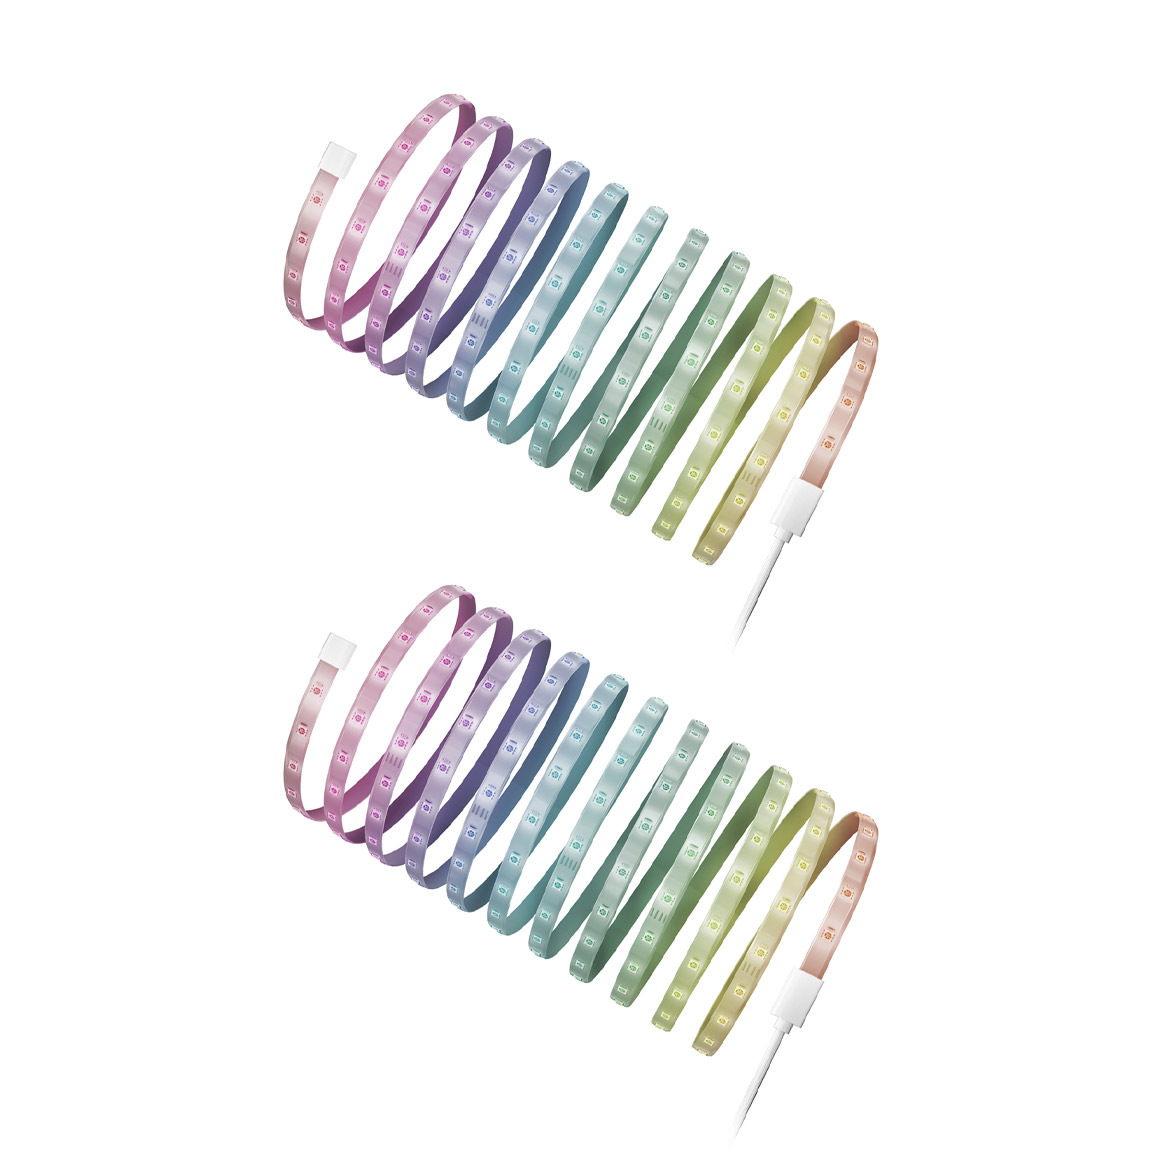 Hombli Led Light Strip RGB 2-pack